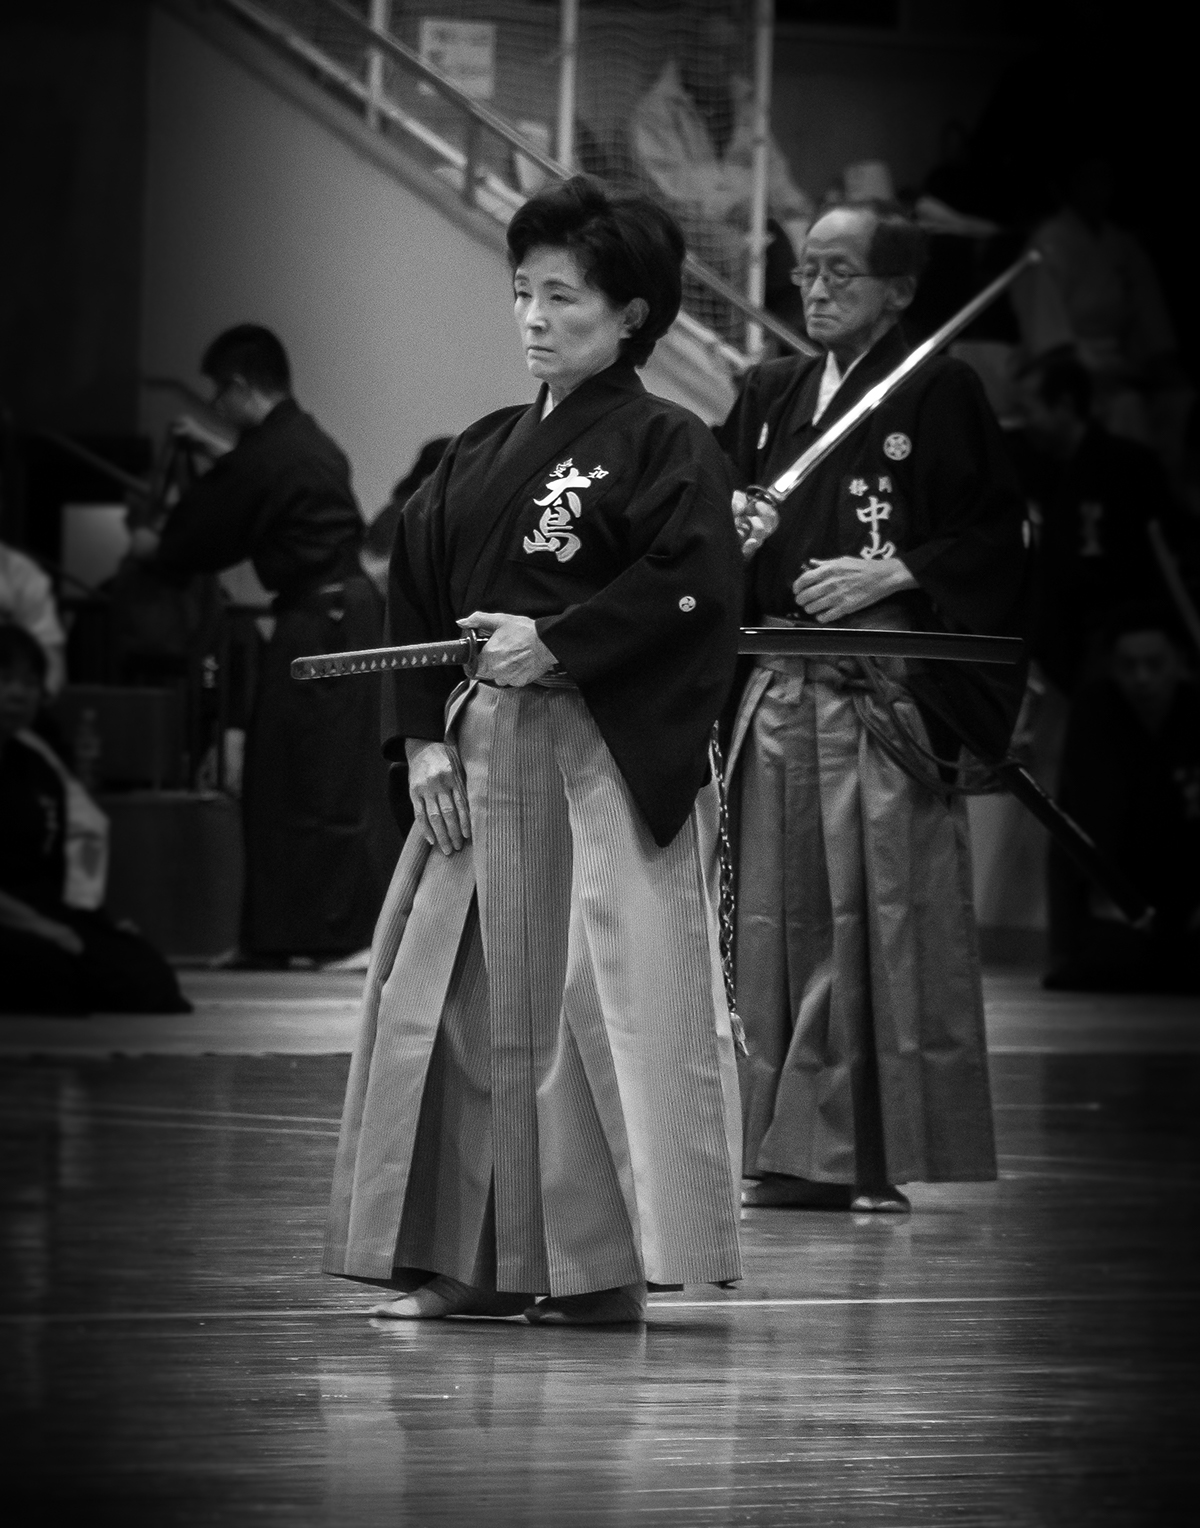 The art of iaido